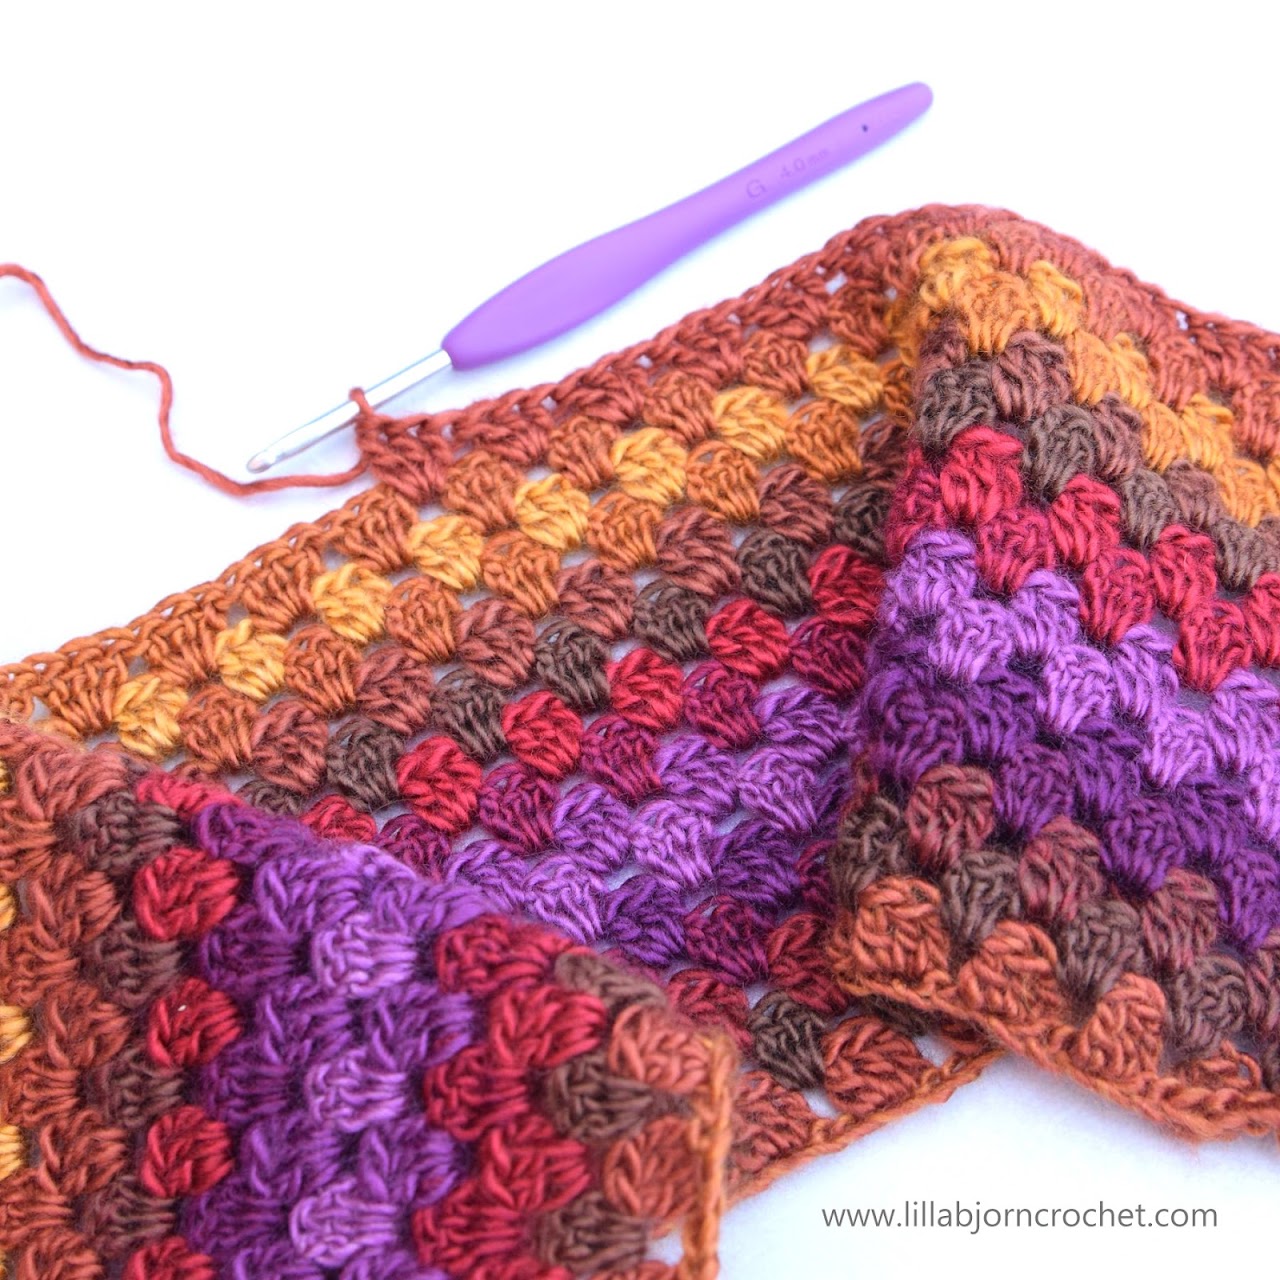 Granny crochet stitch and variagated yarn. www.lillabjorncrochet.com